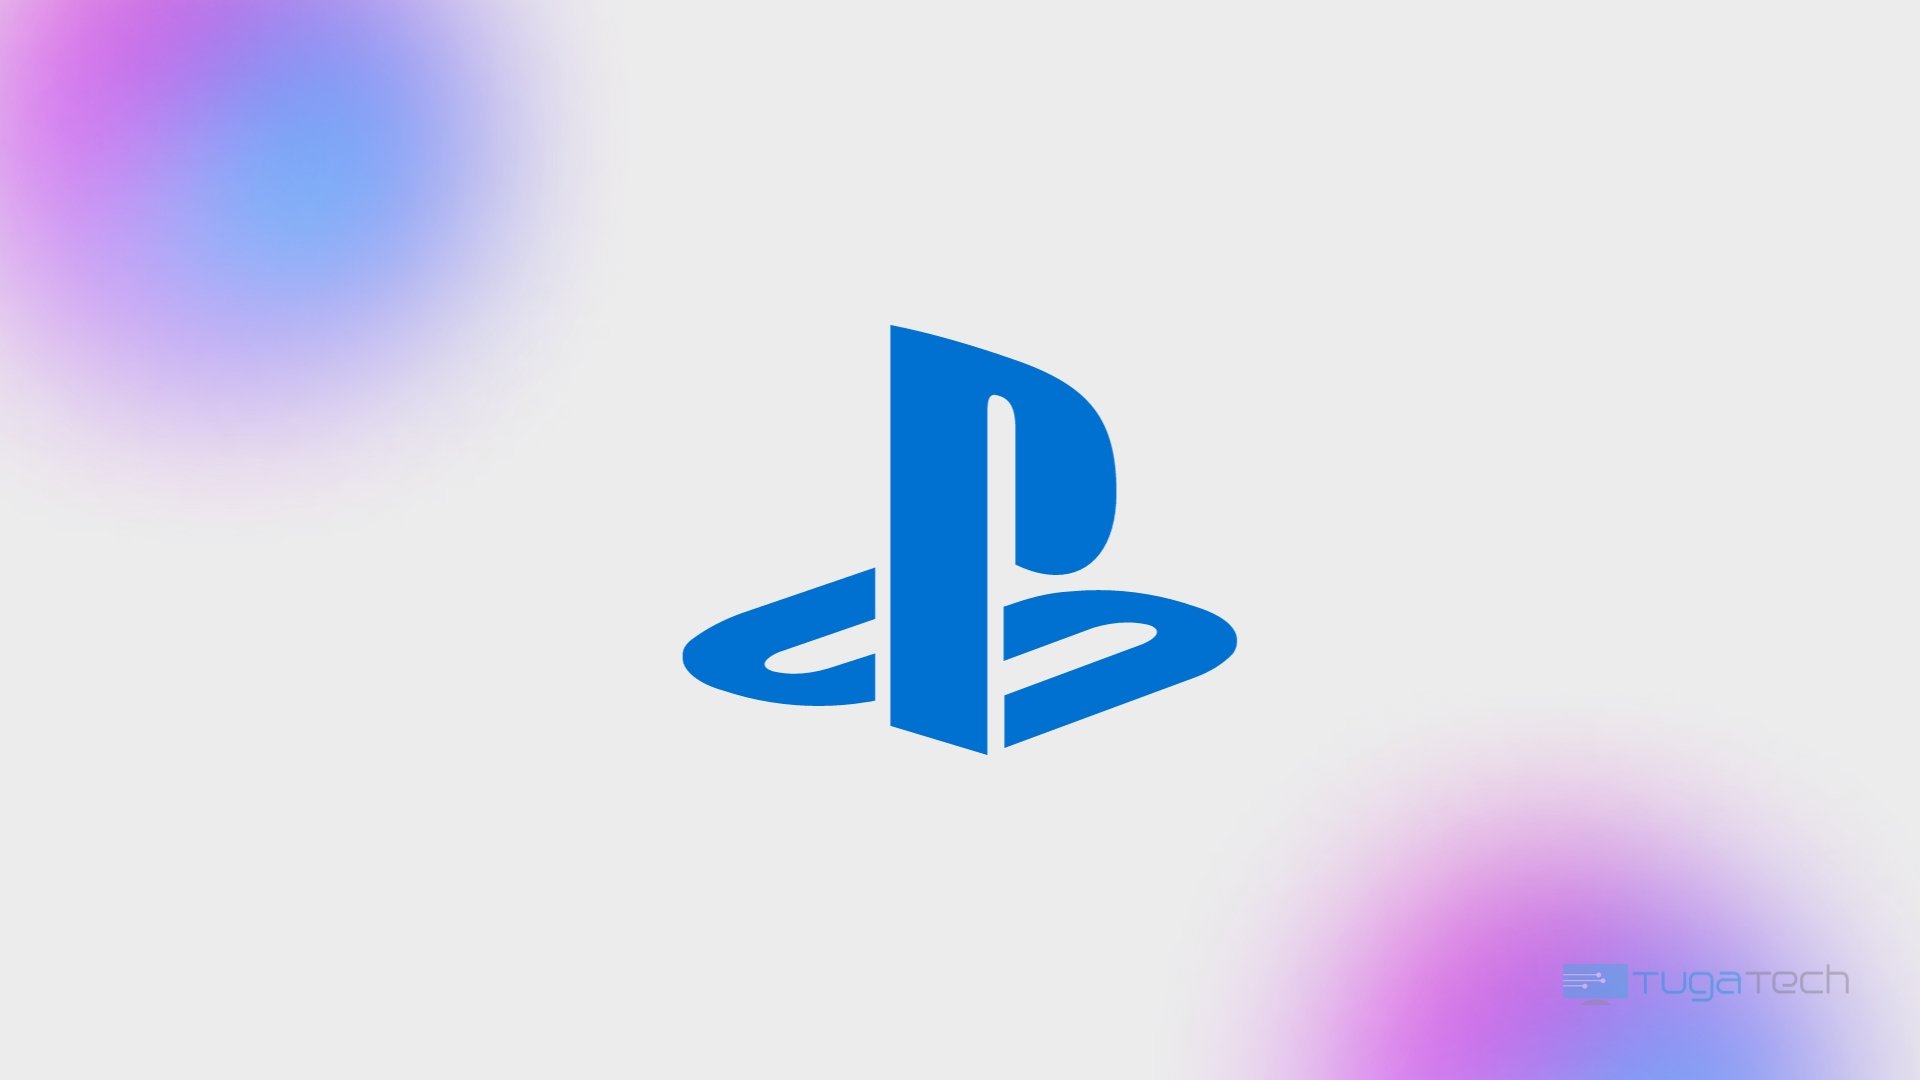 Logo da Playstation